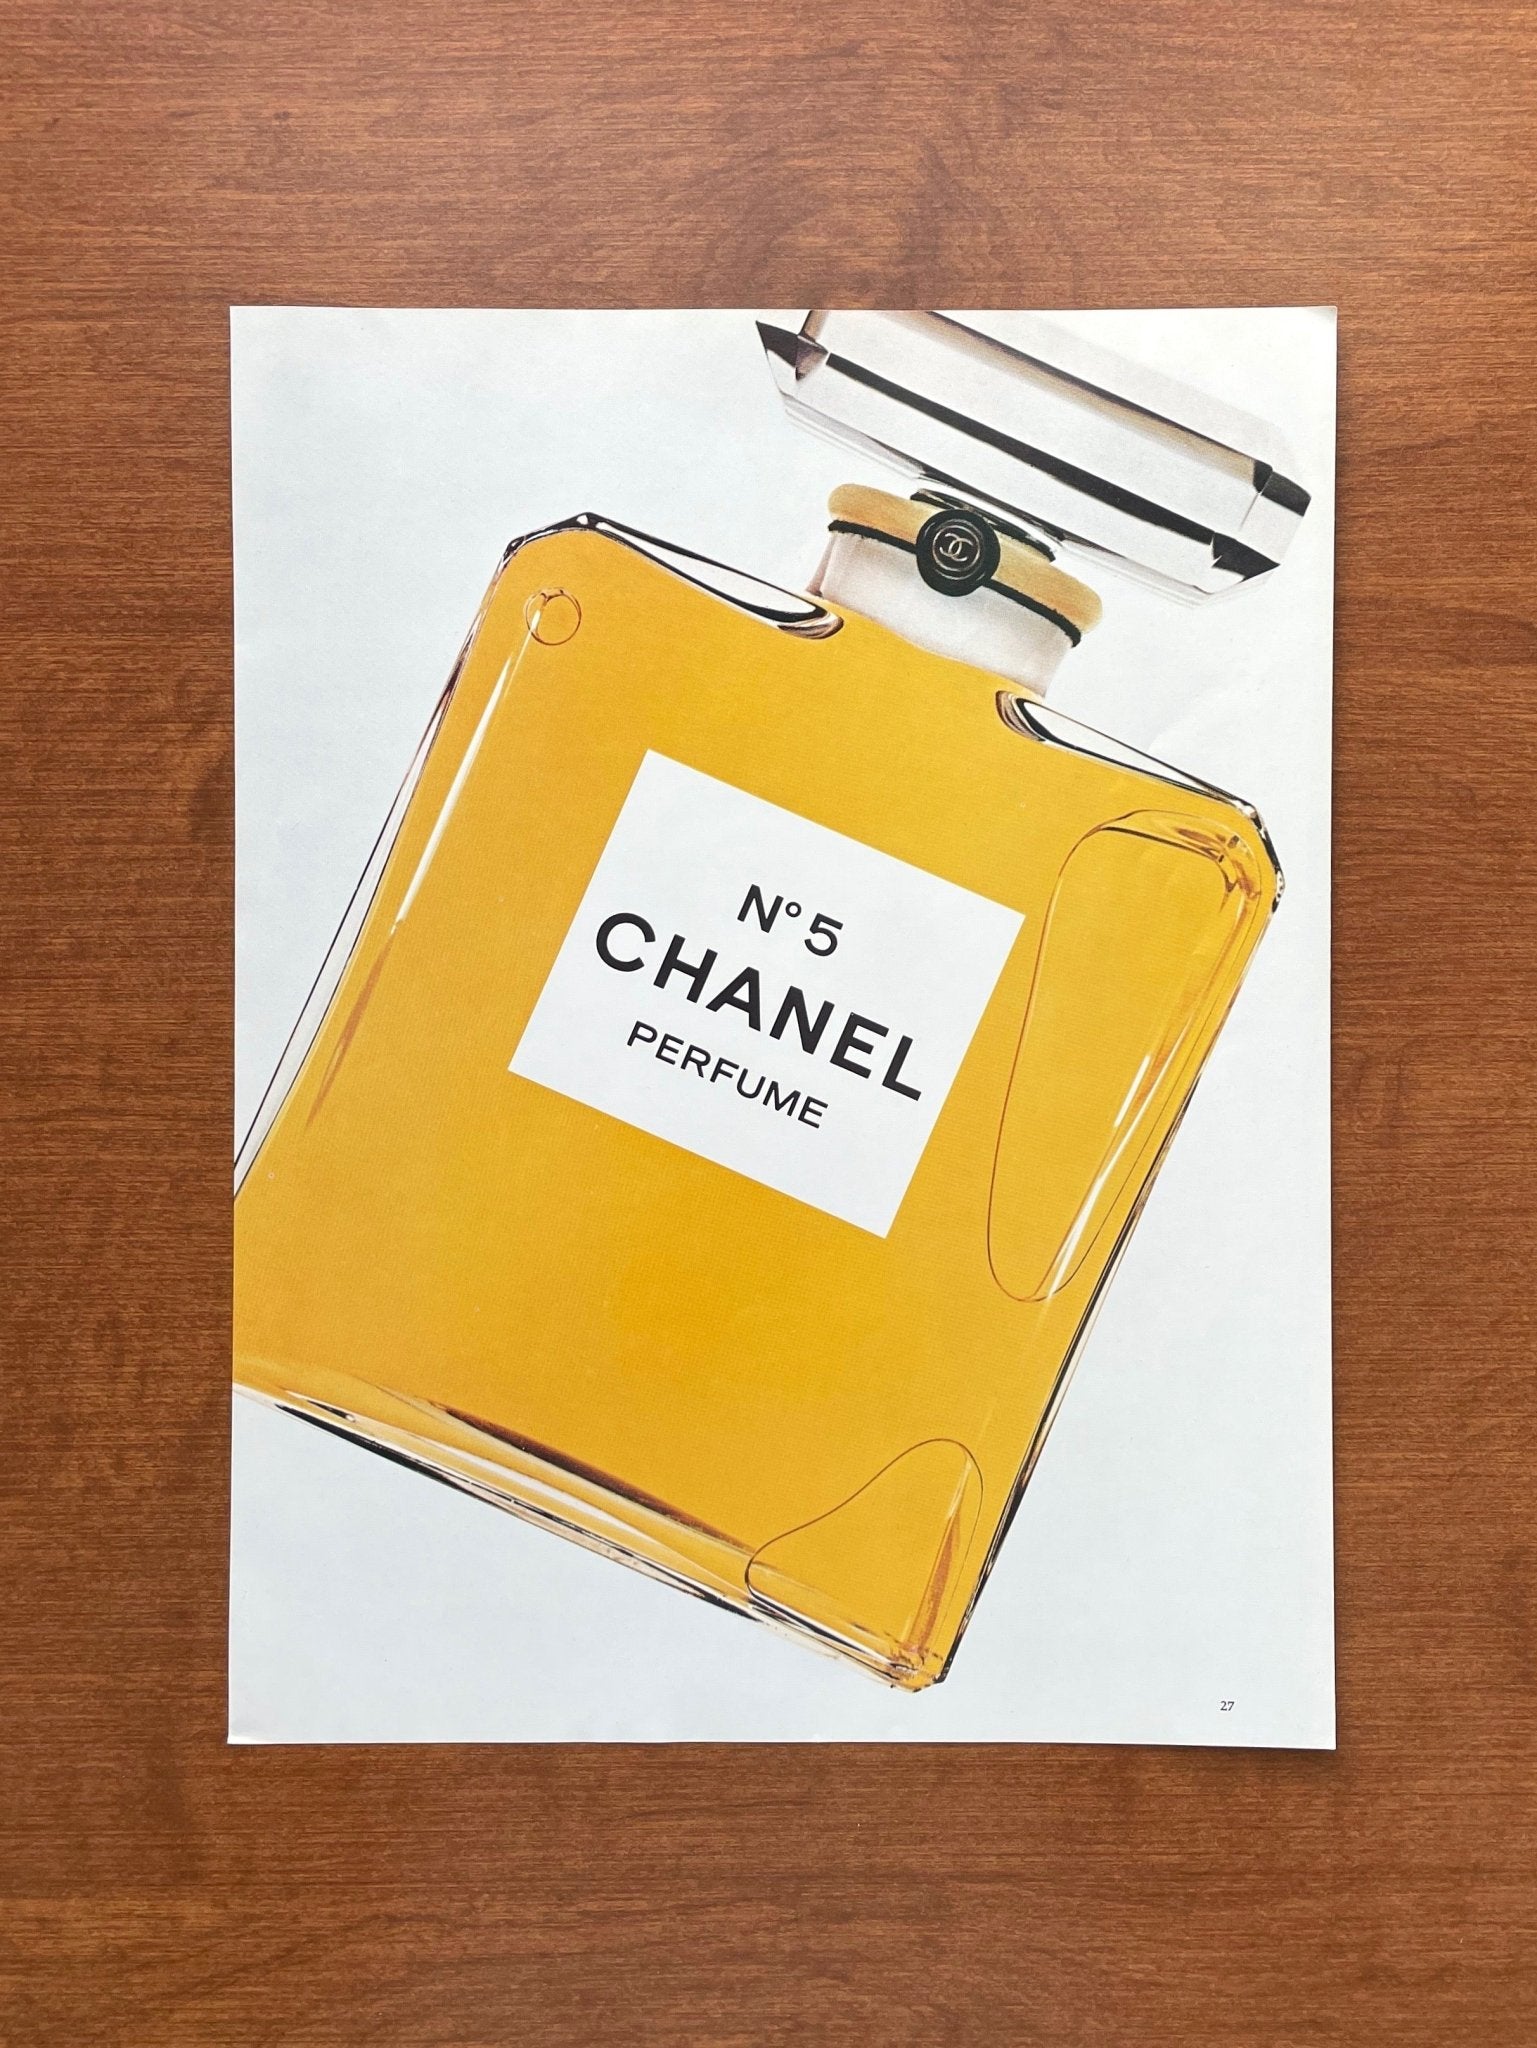 Chanel No 5 Perfume Advertisement